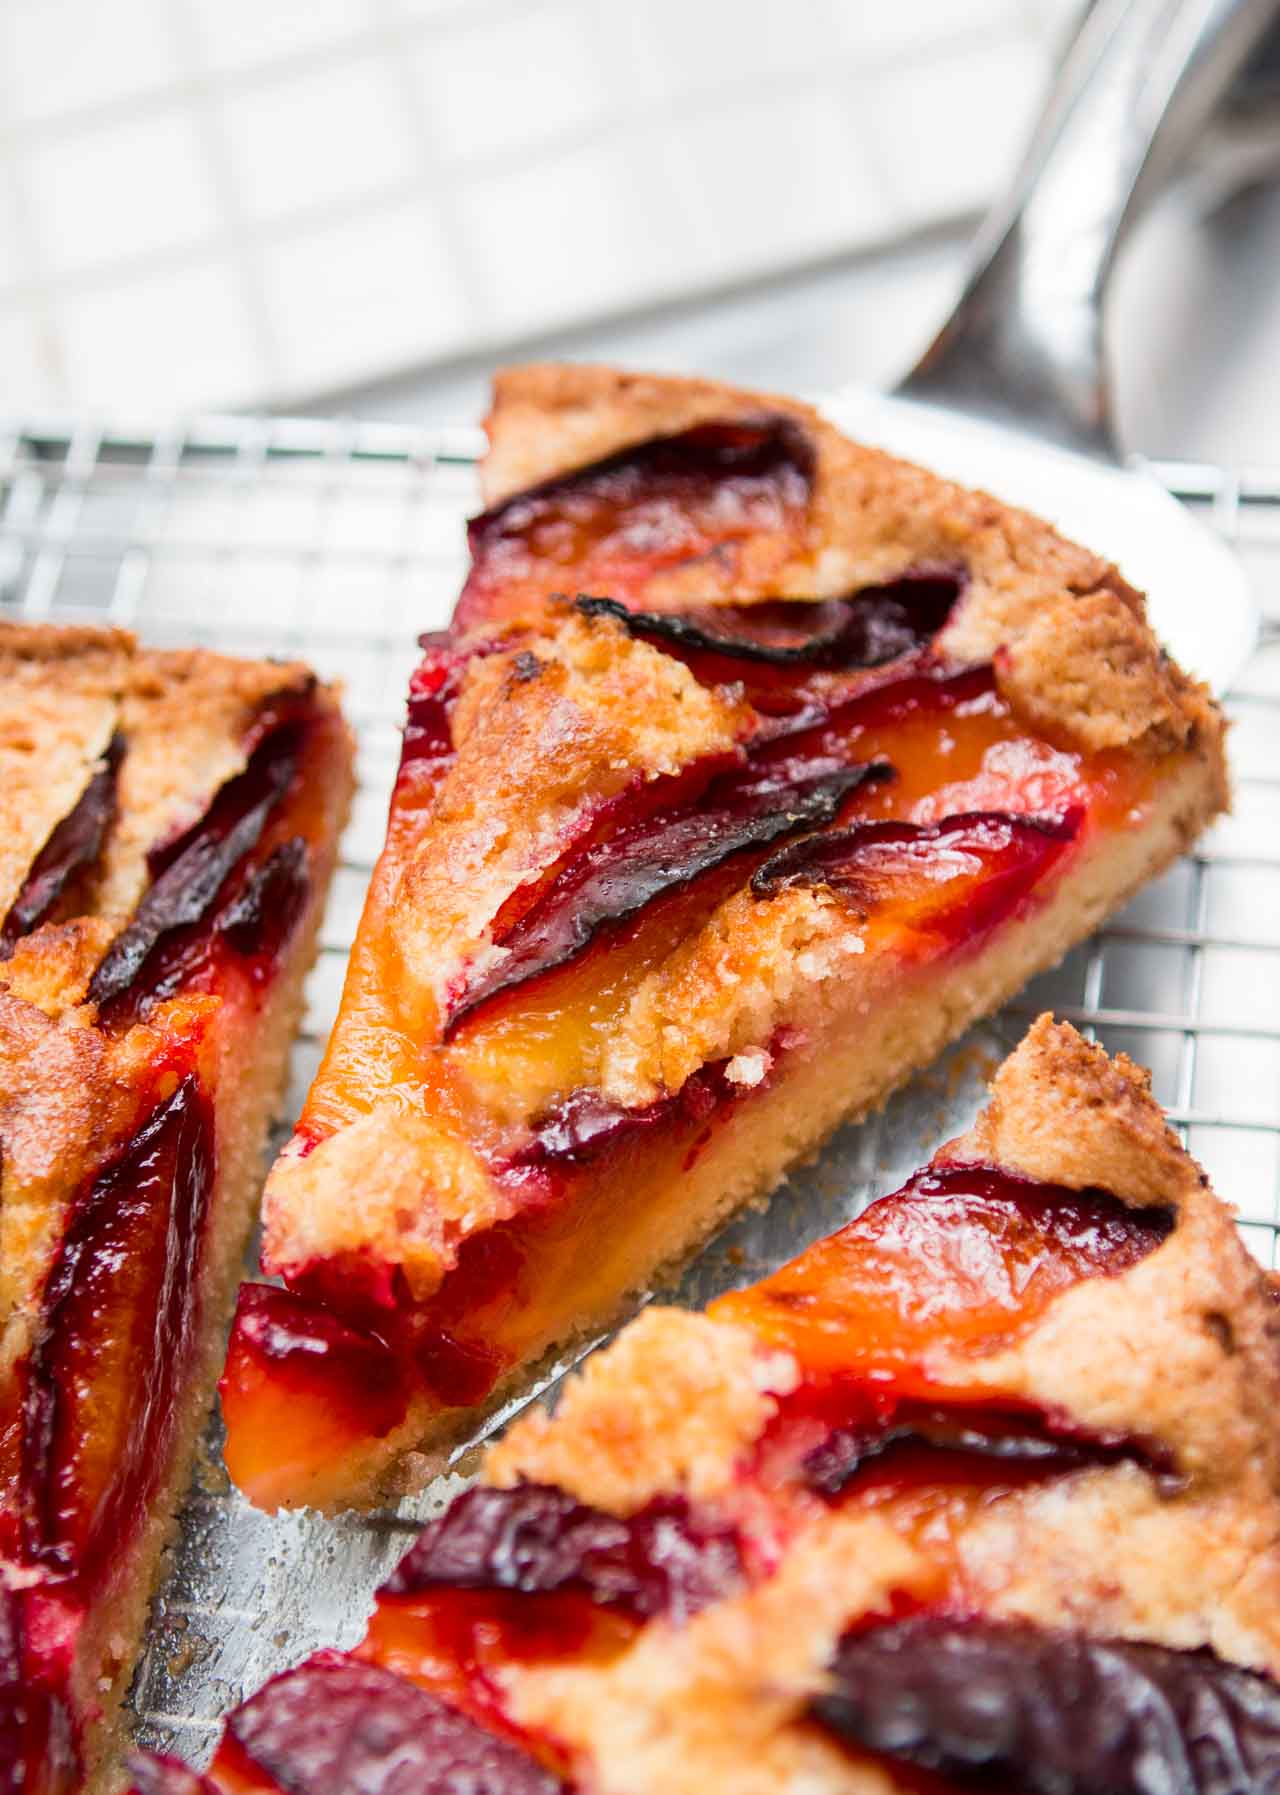 https://www.davidlebovitz.com/wp-content/uploads/2020/07/Moelleux-apricot-plum-cake-summer-french-dessert-recipe-fruits-fruit-8.jpg